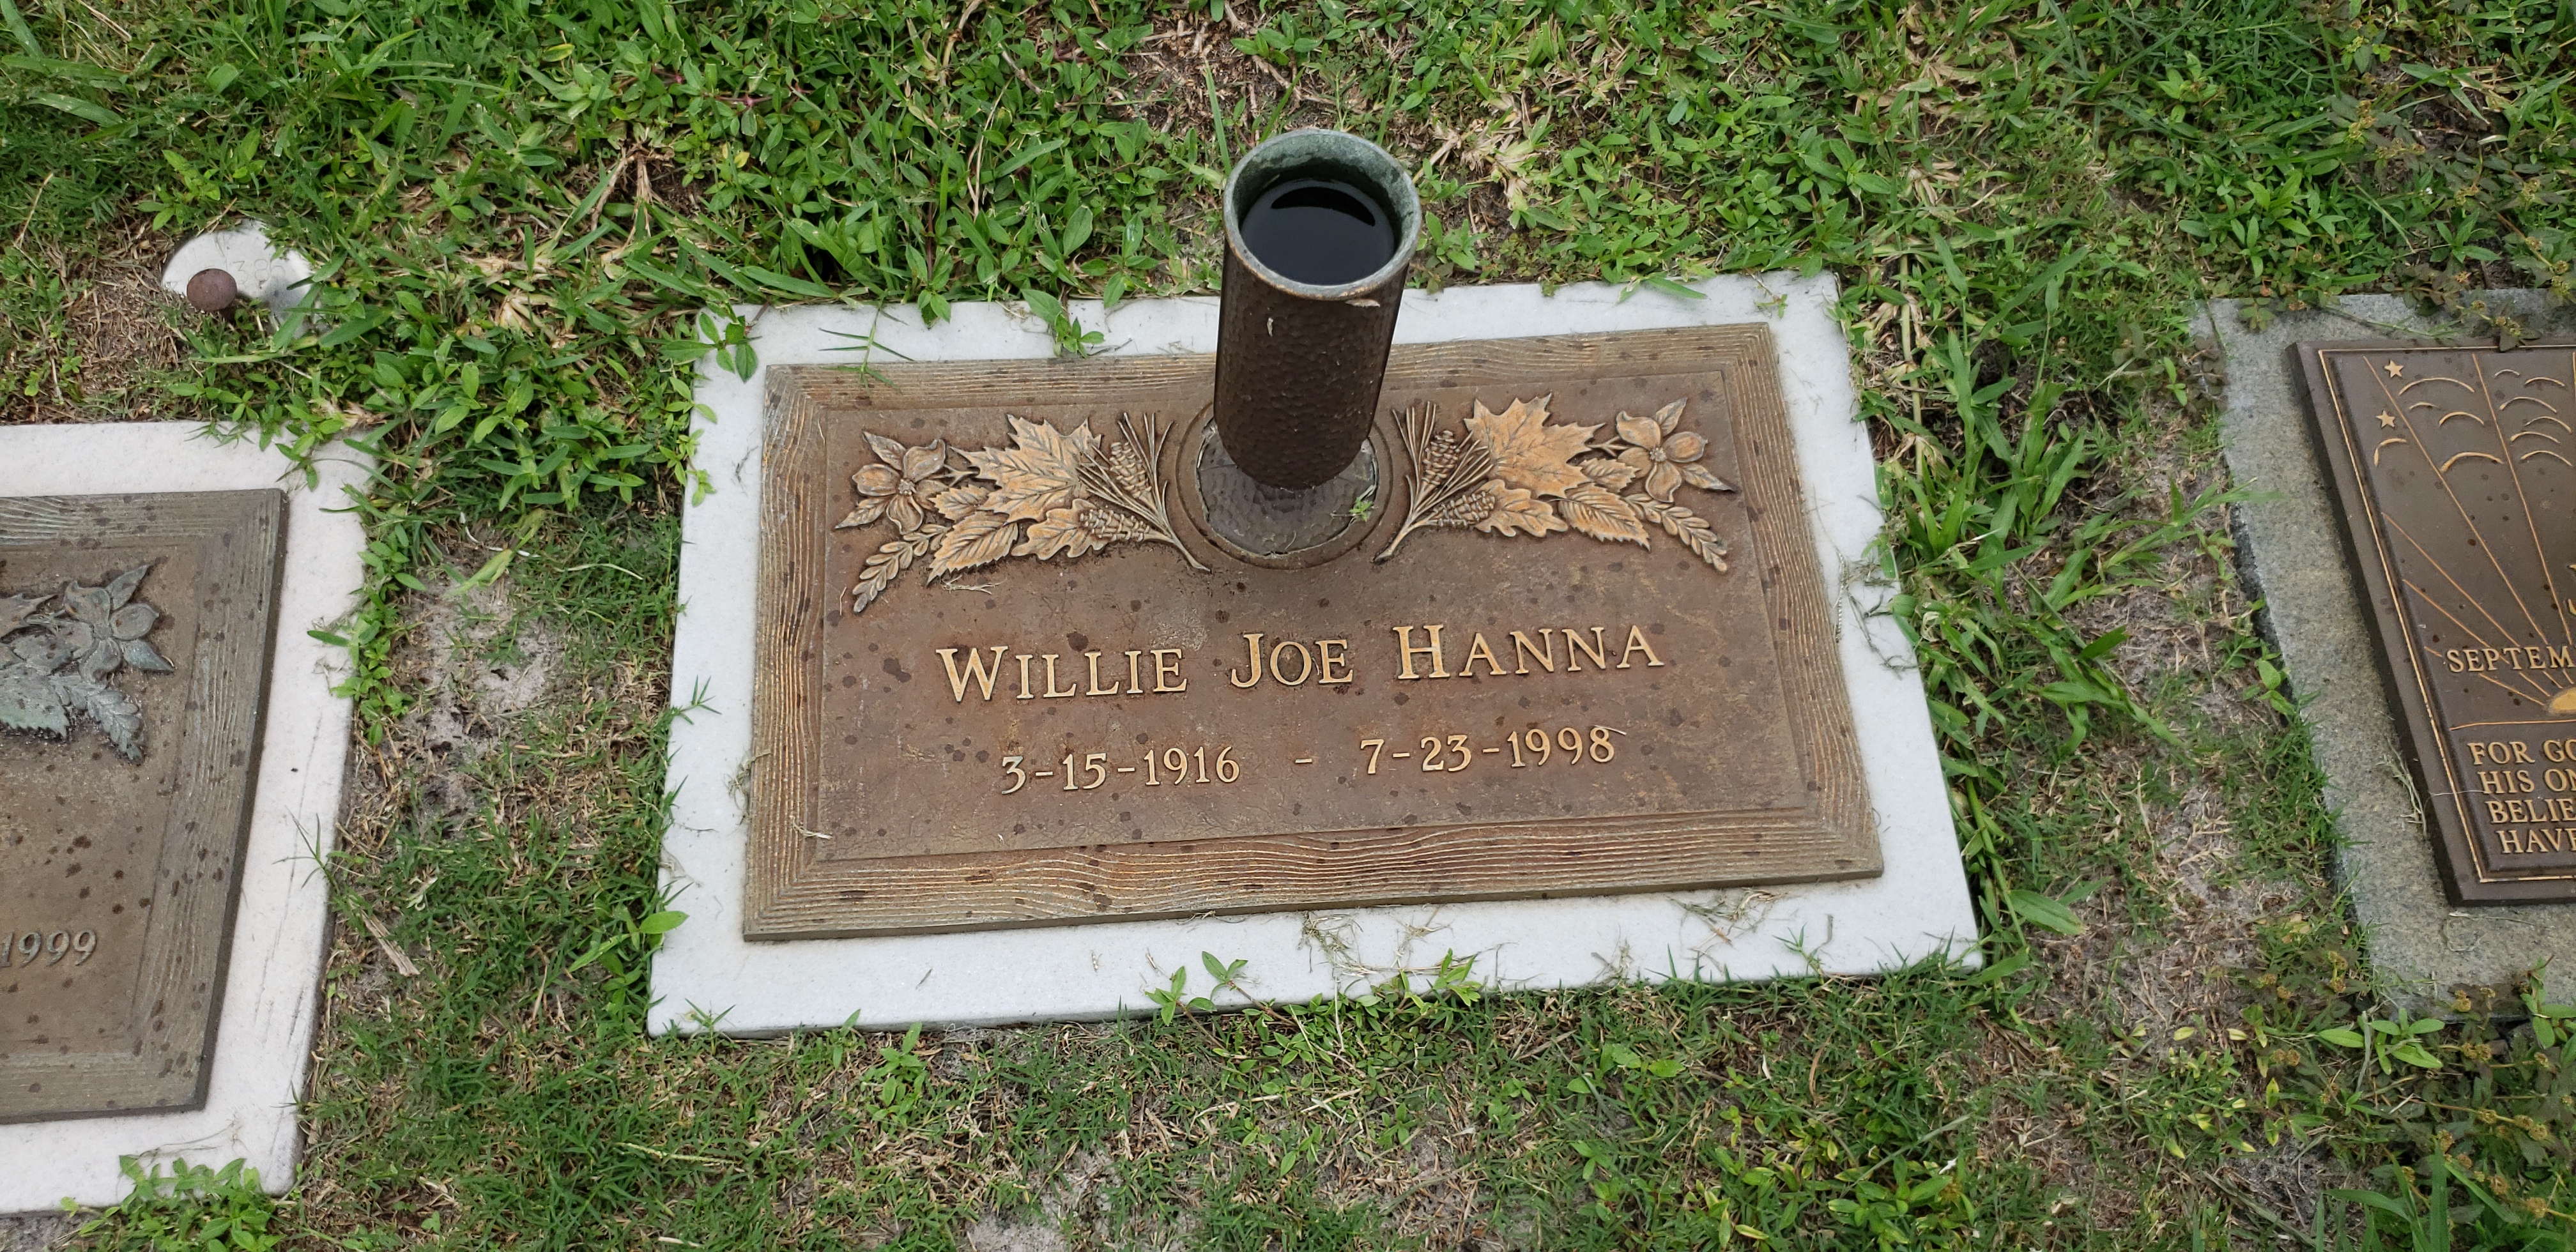 Willie Joe Hanna